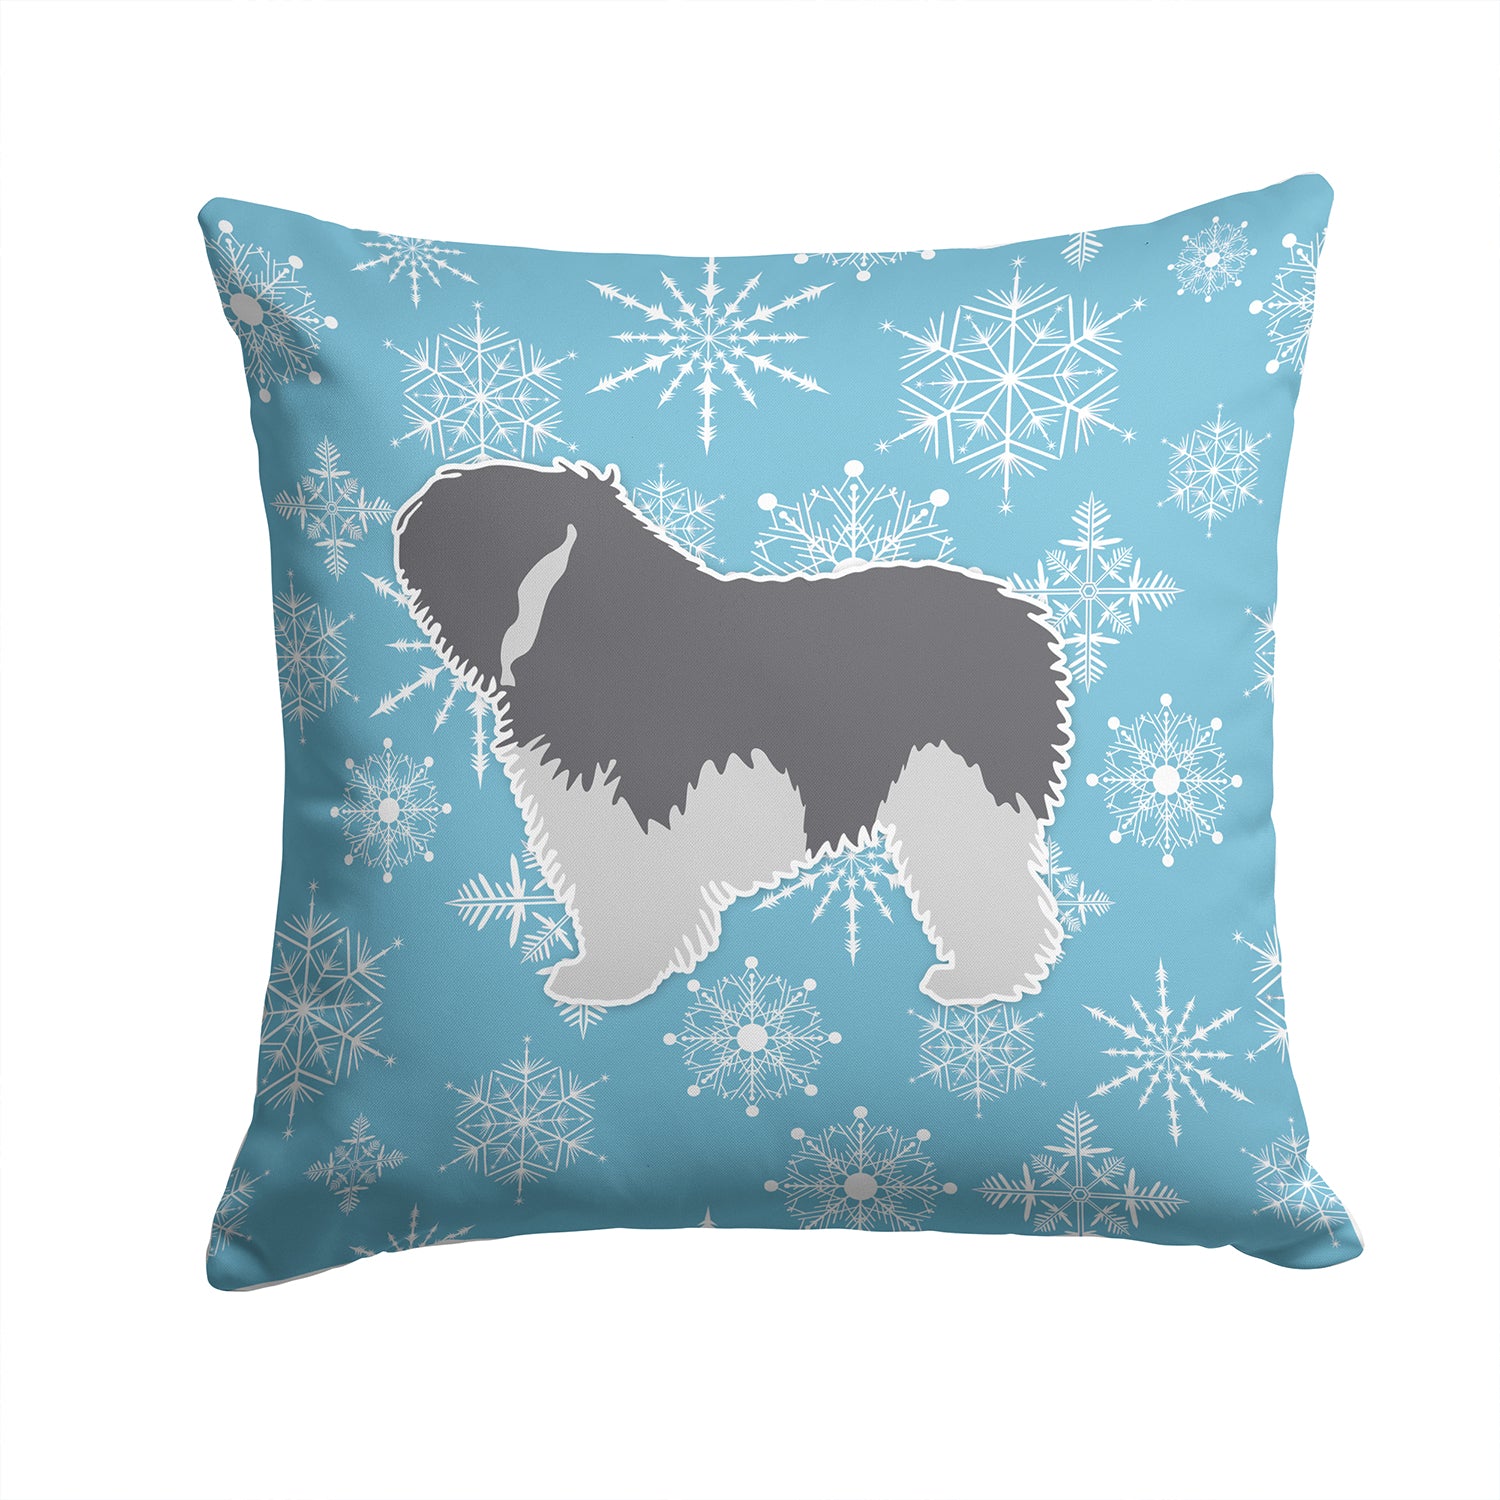 Winter Snowflake Polish Lowland Sheepdog Dog Fabric Decorative Pillow BB3532PW1414 - the-store.com